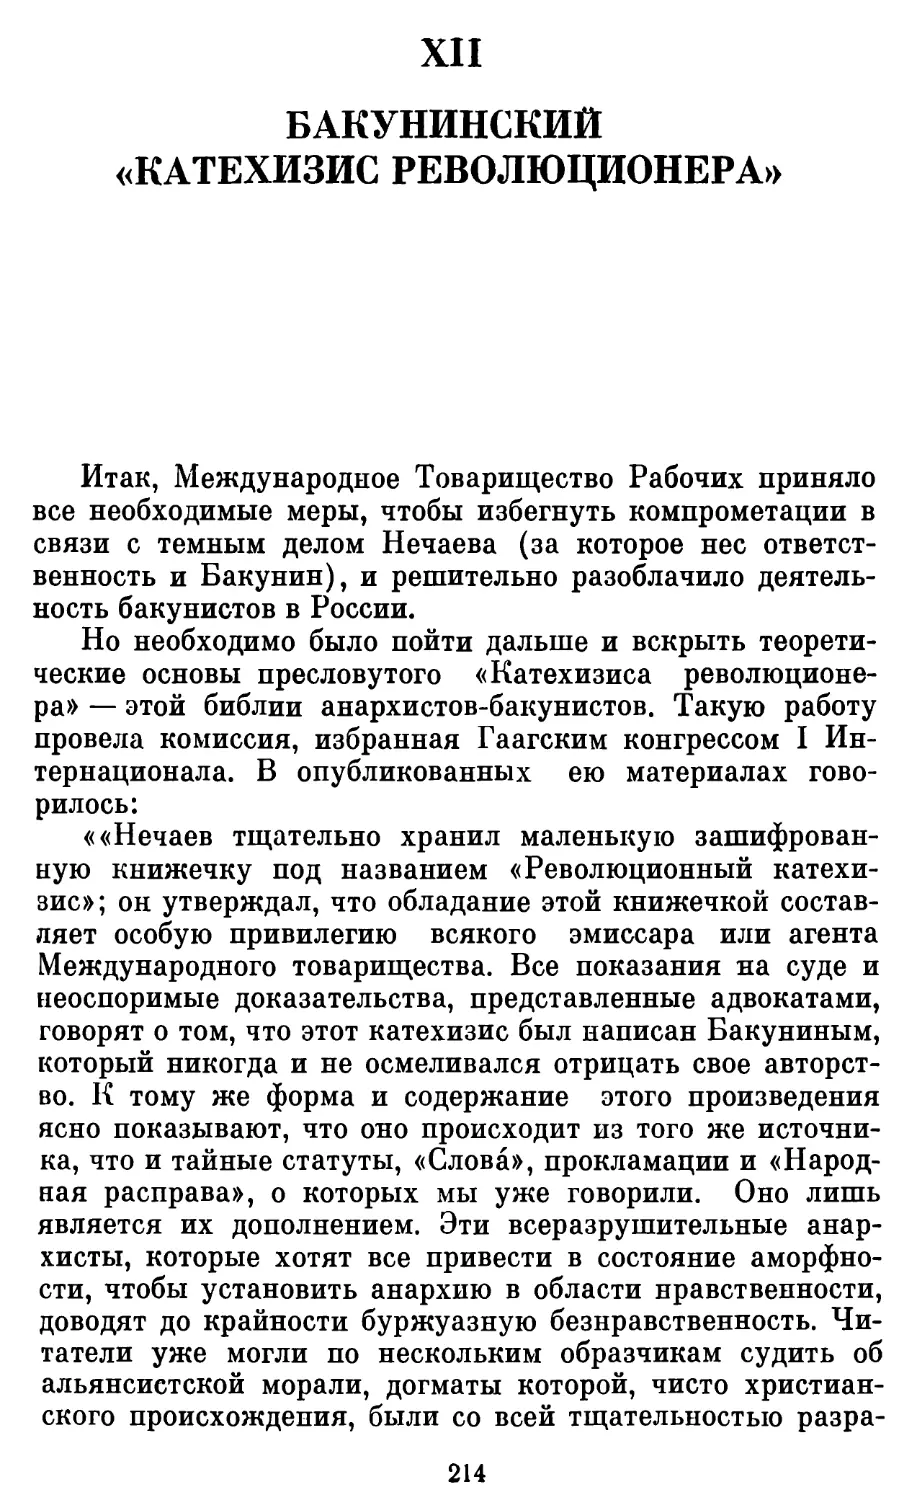 XII. Бакунинский «Катехизис революционера»